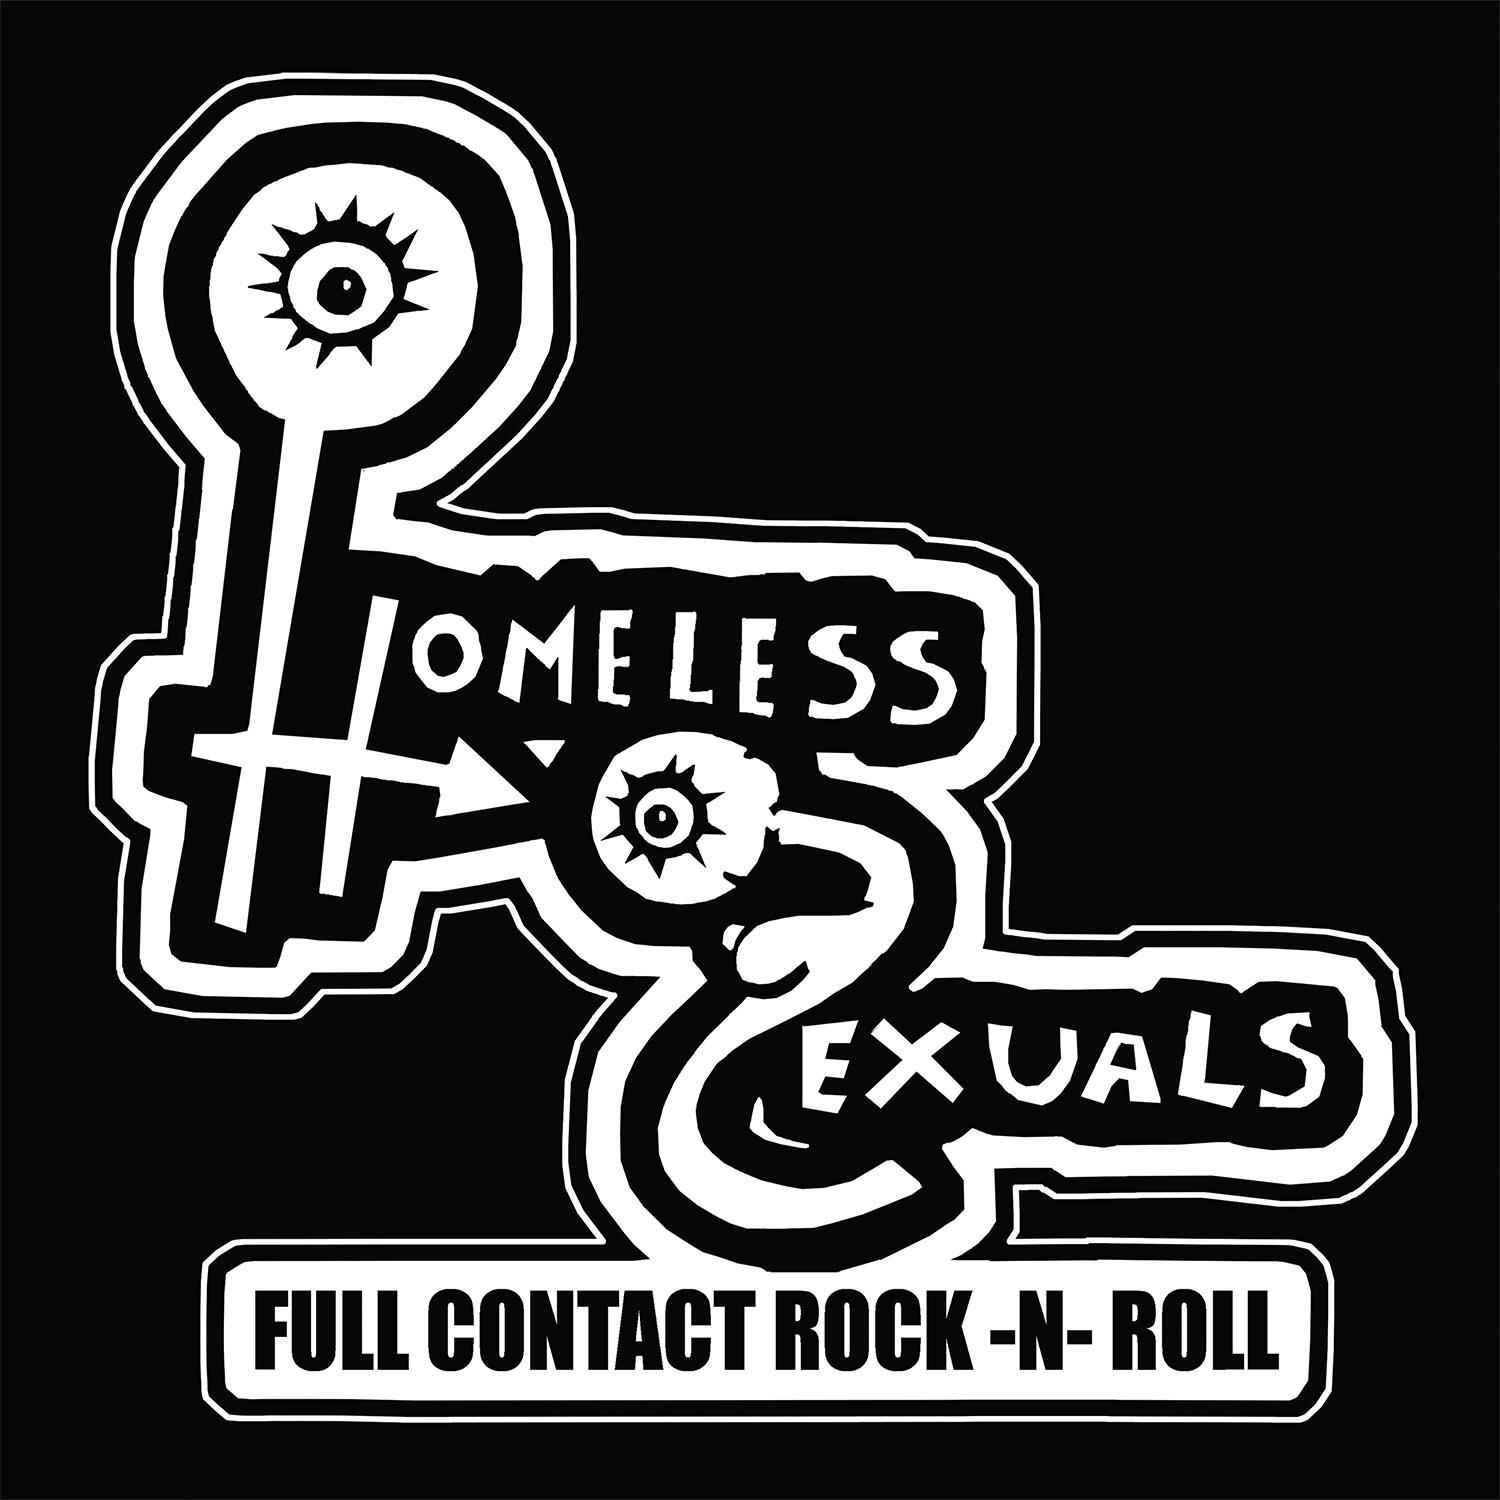 Homeless Sexuals Logo